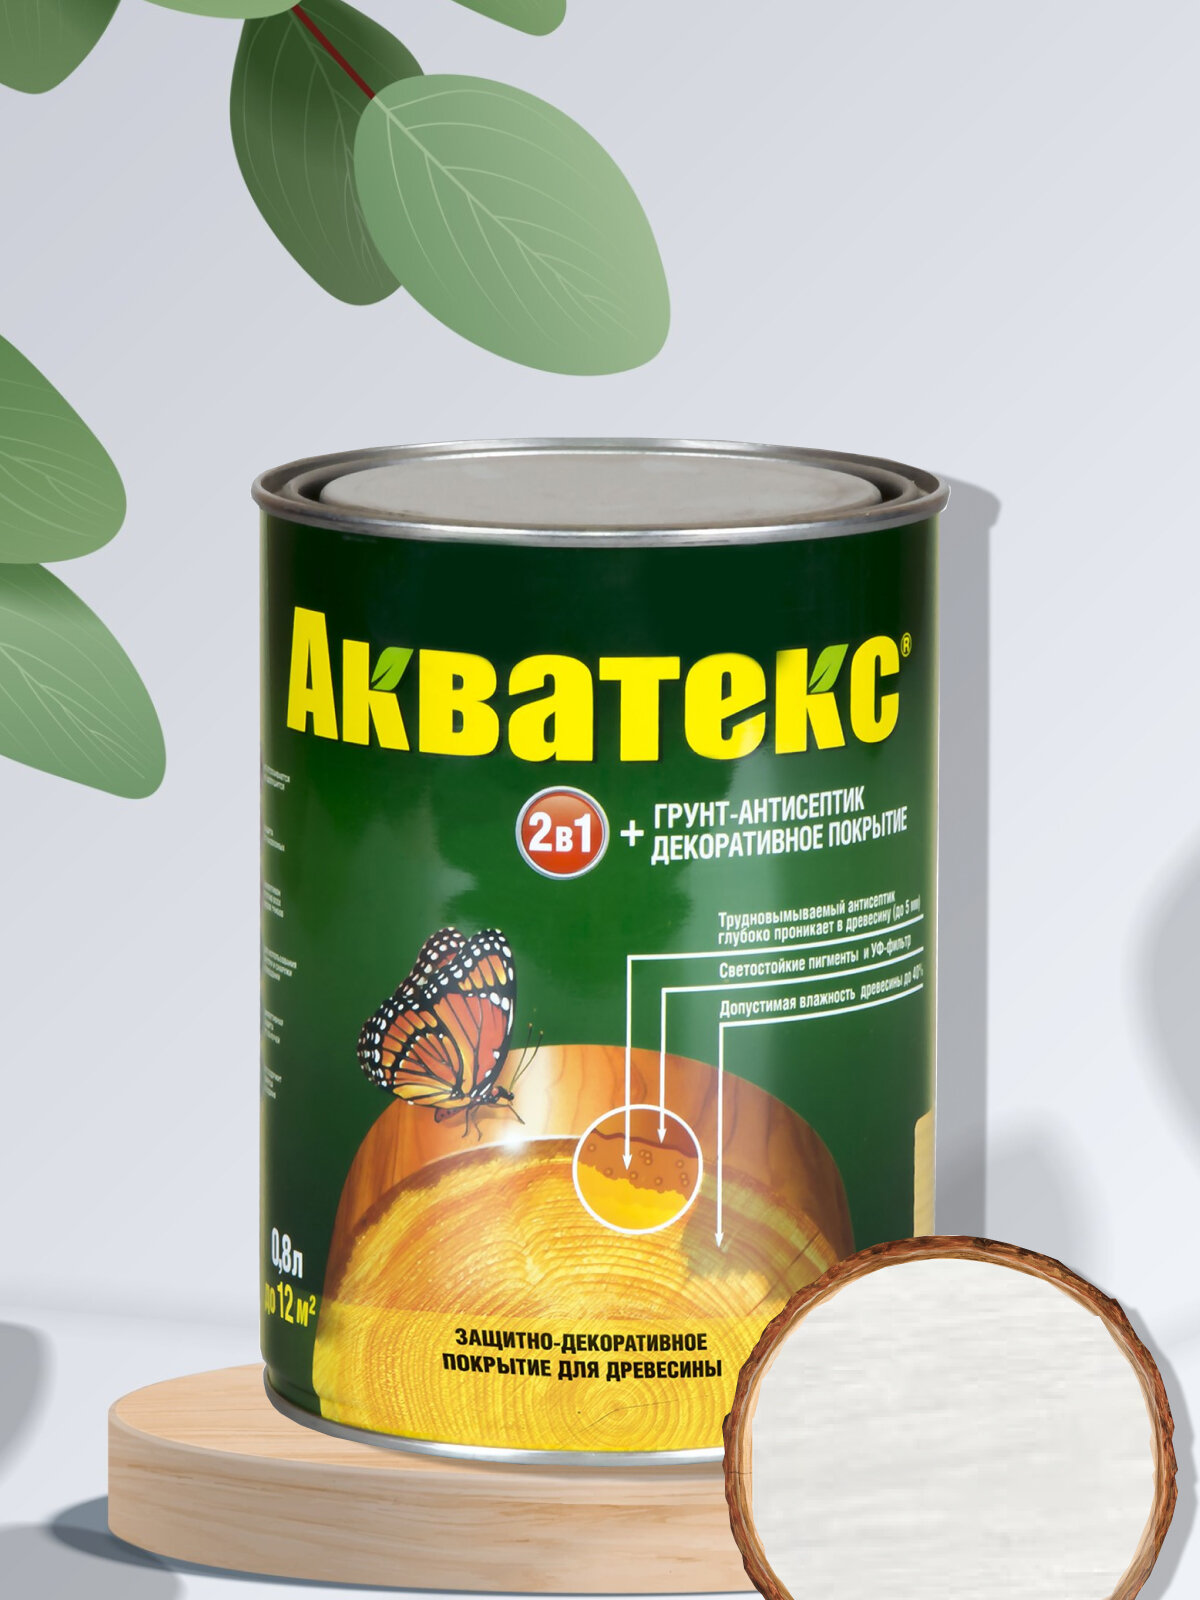 Акватекс" - декоративная пропитка и грунтовка объемом 0,8 литра, цвет "Белый